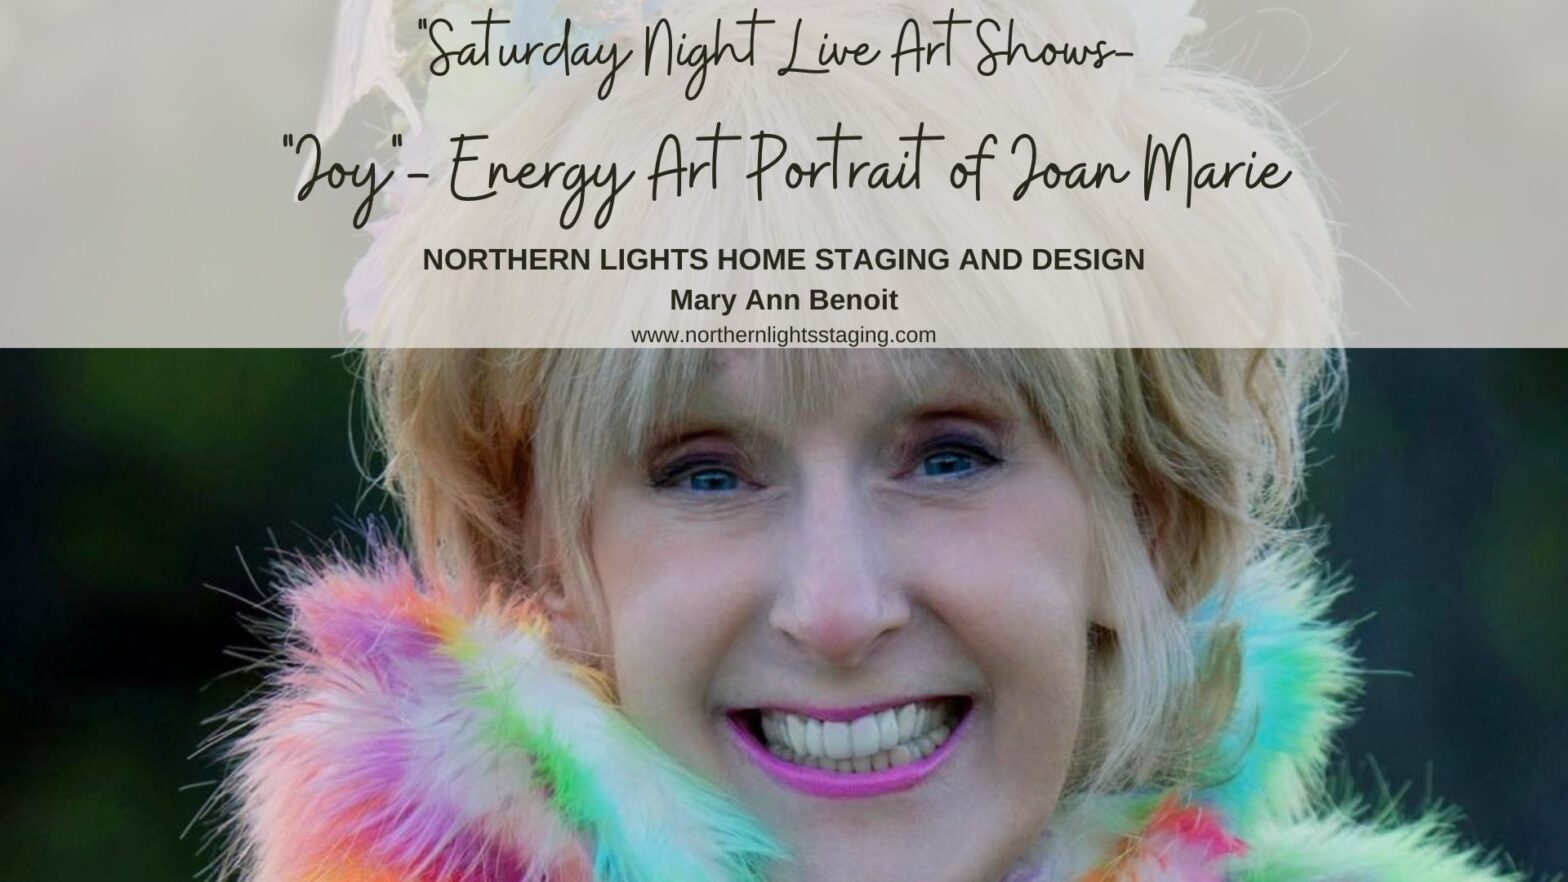 Saturday Night Live Art Shows: "Joy"- Energy Art portrait of Joan Marie.